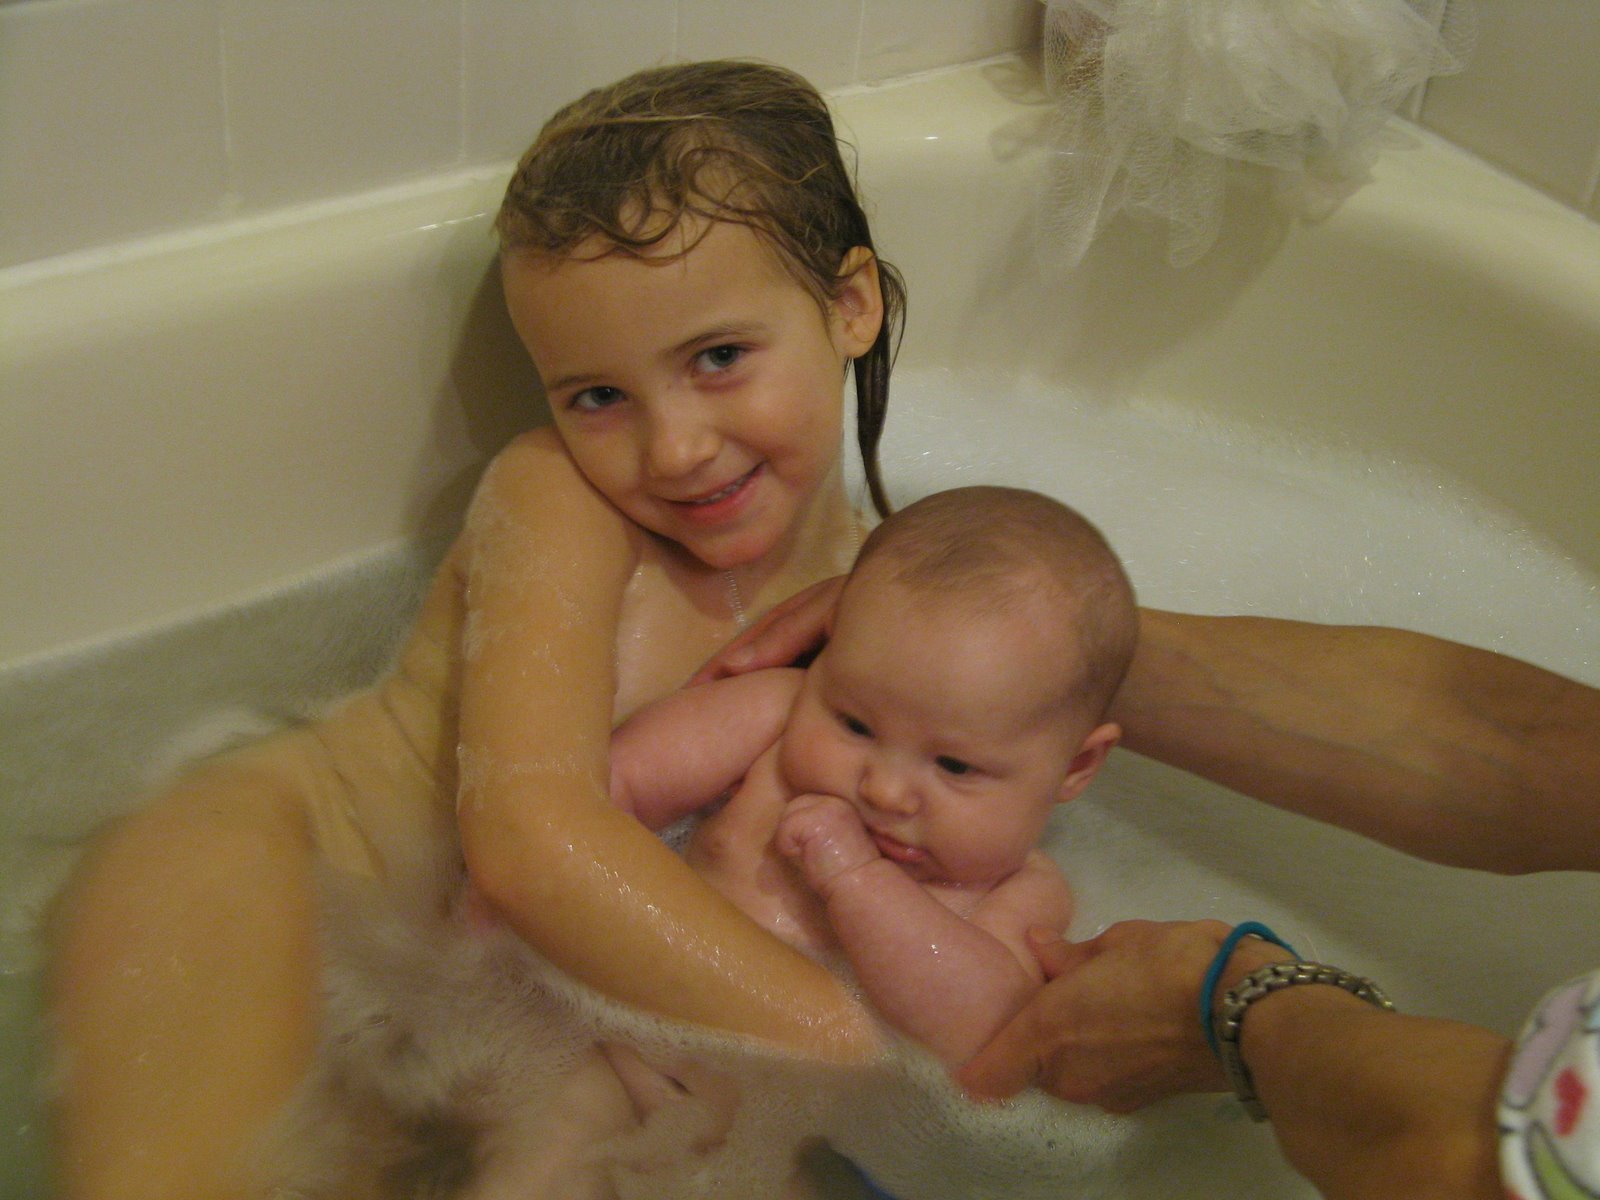 Young teen girl bath time